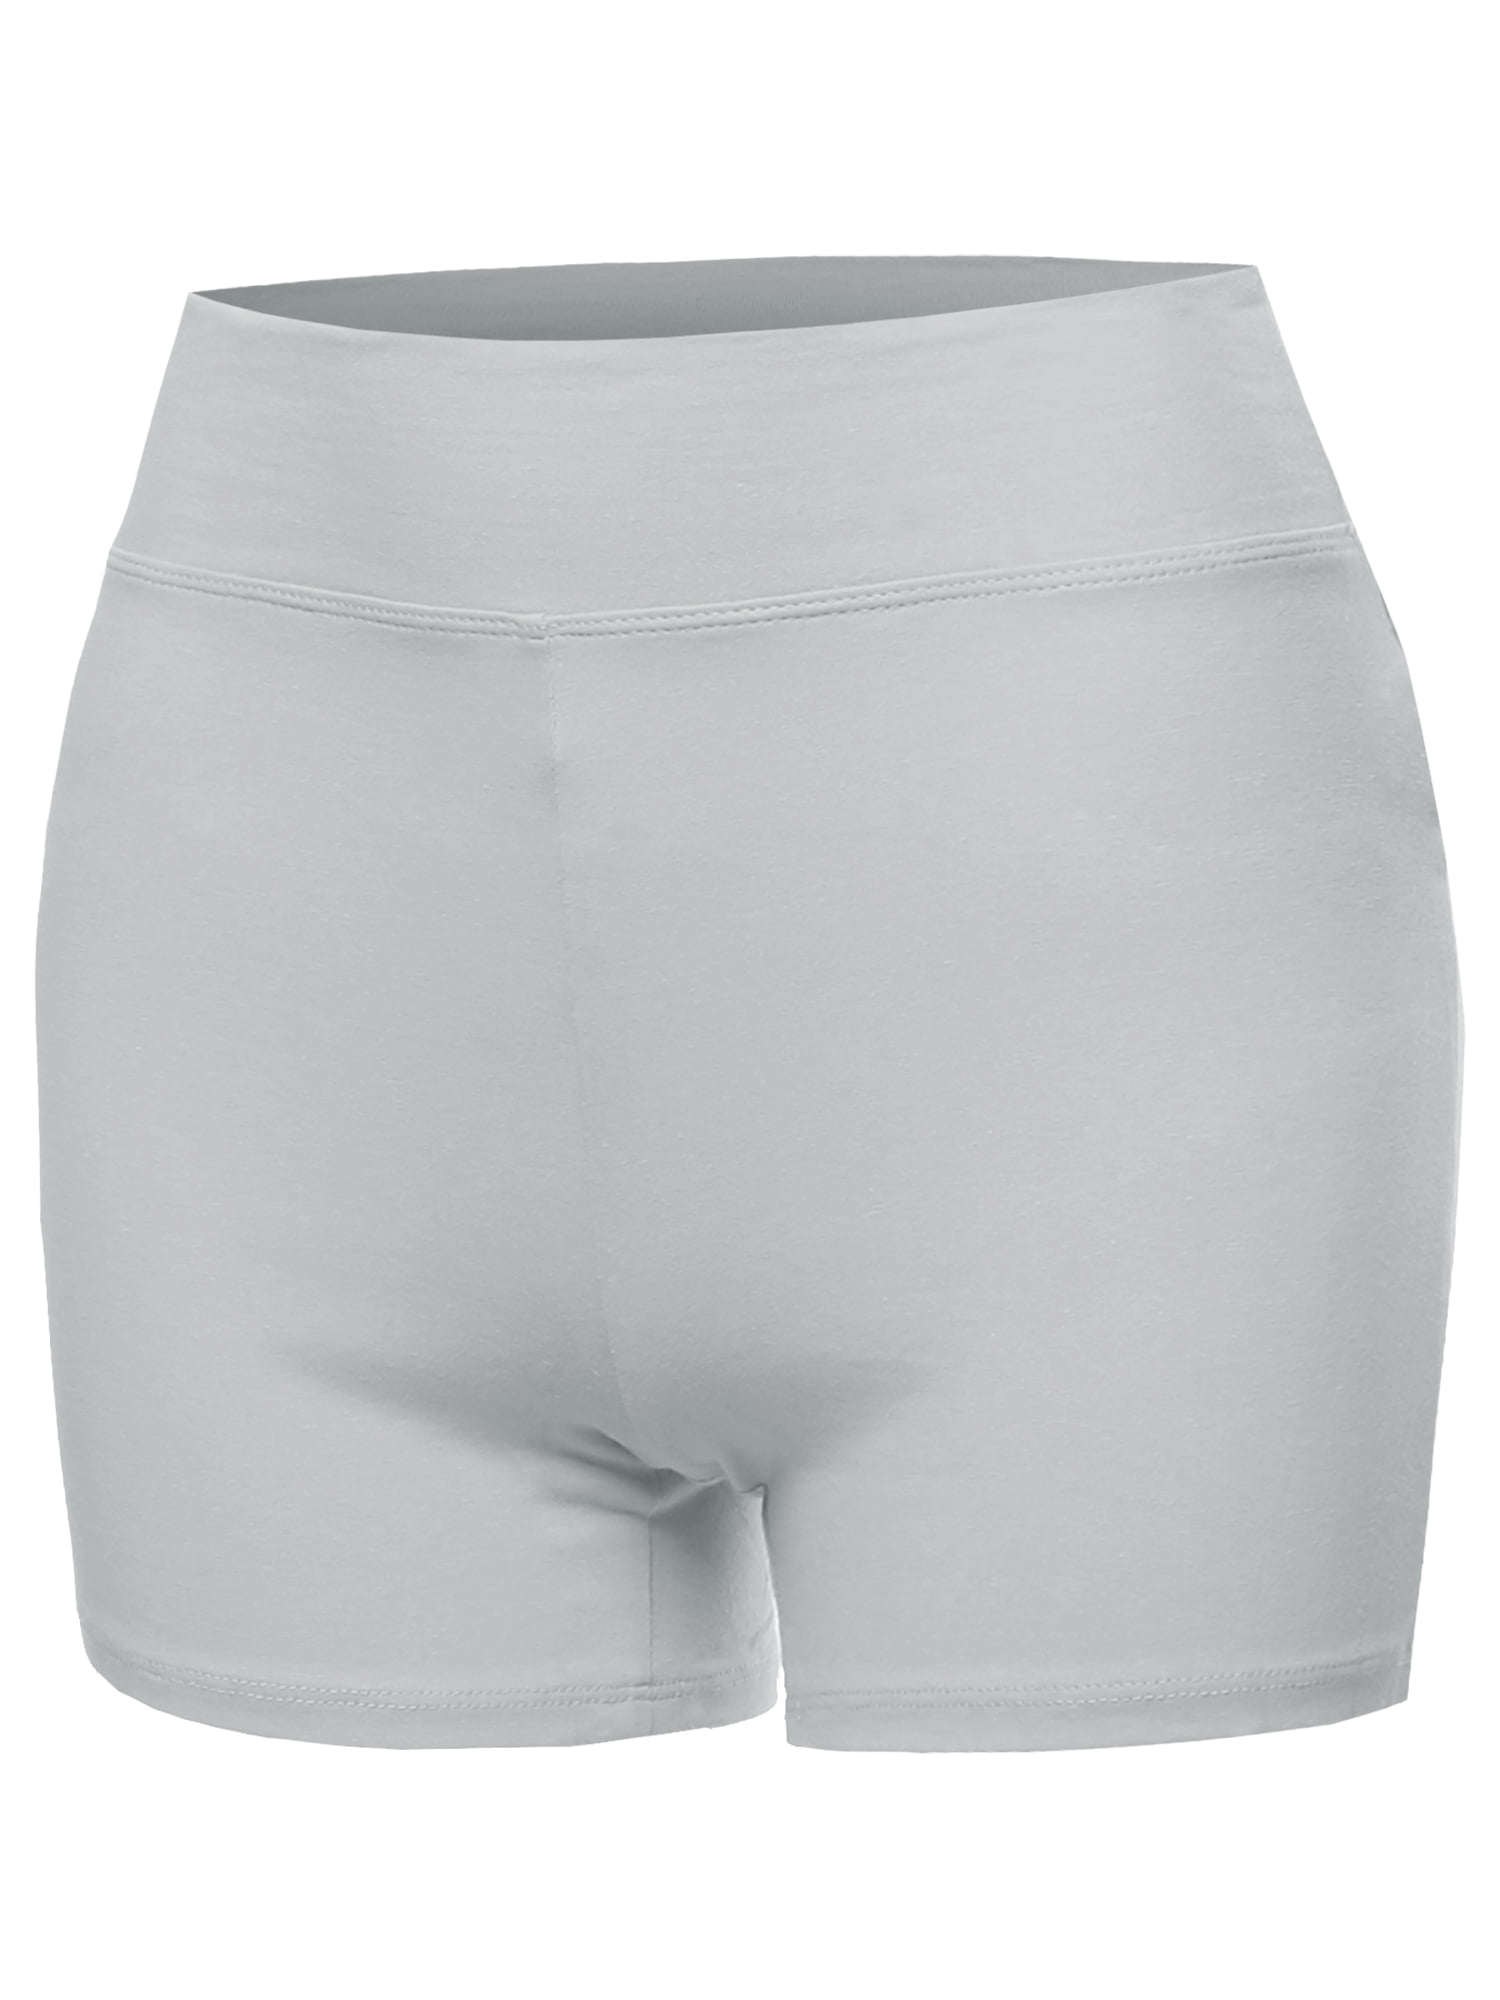 A2Y Women's Basic Solid Premium Cotton High Rise Bike Shorts Grey Mist ...